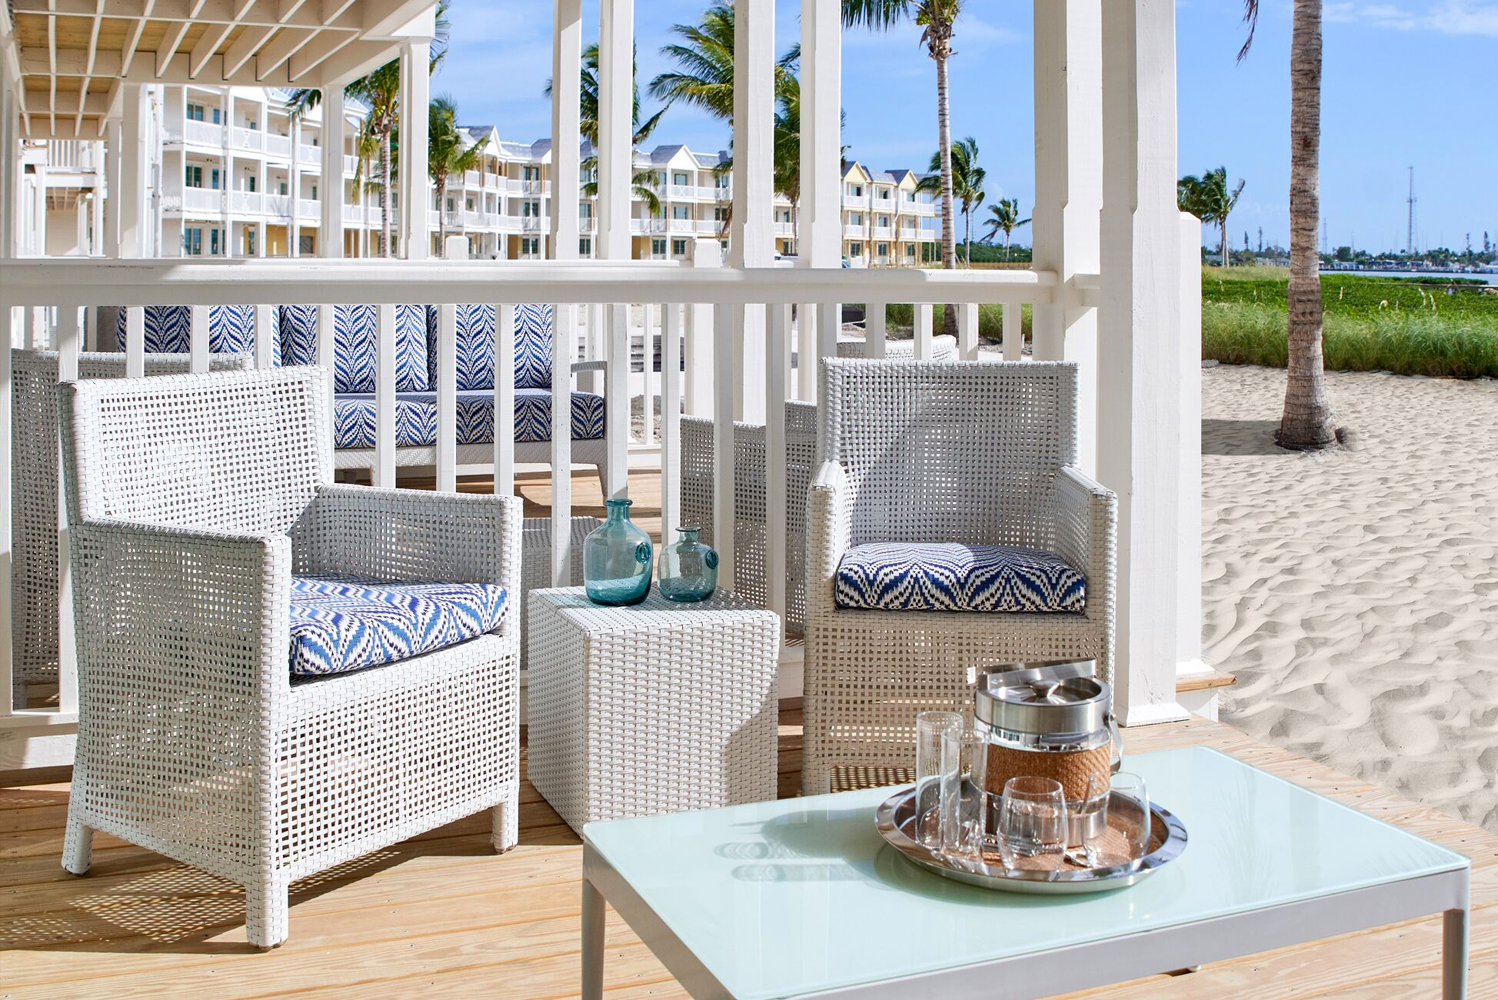 Isla Bella Beach Resort opened as the newest resort in Florida Keys 